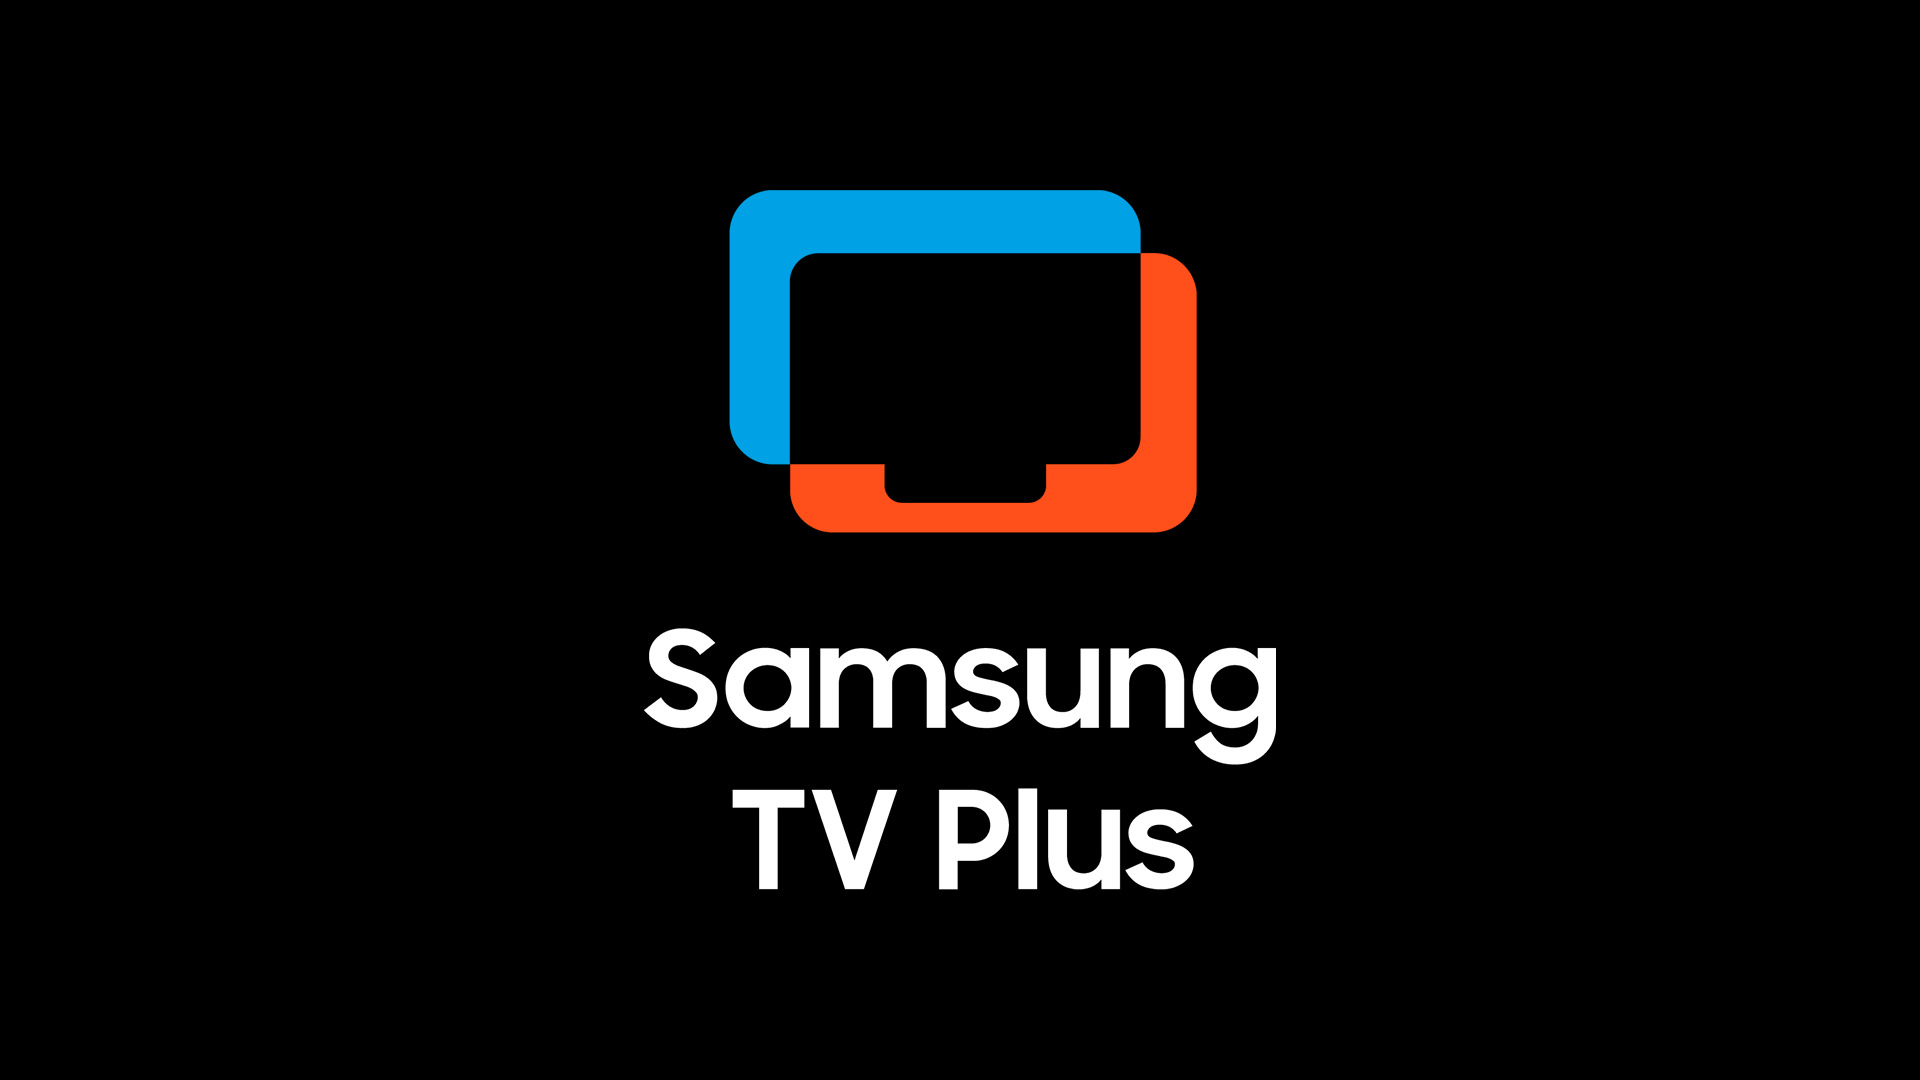 Image of the Samsung TV plus logo.